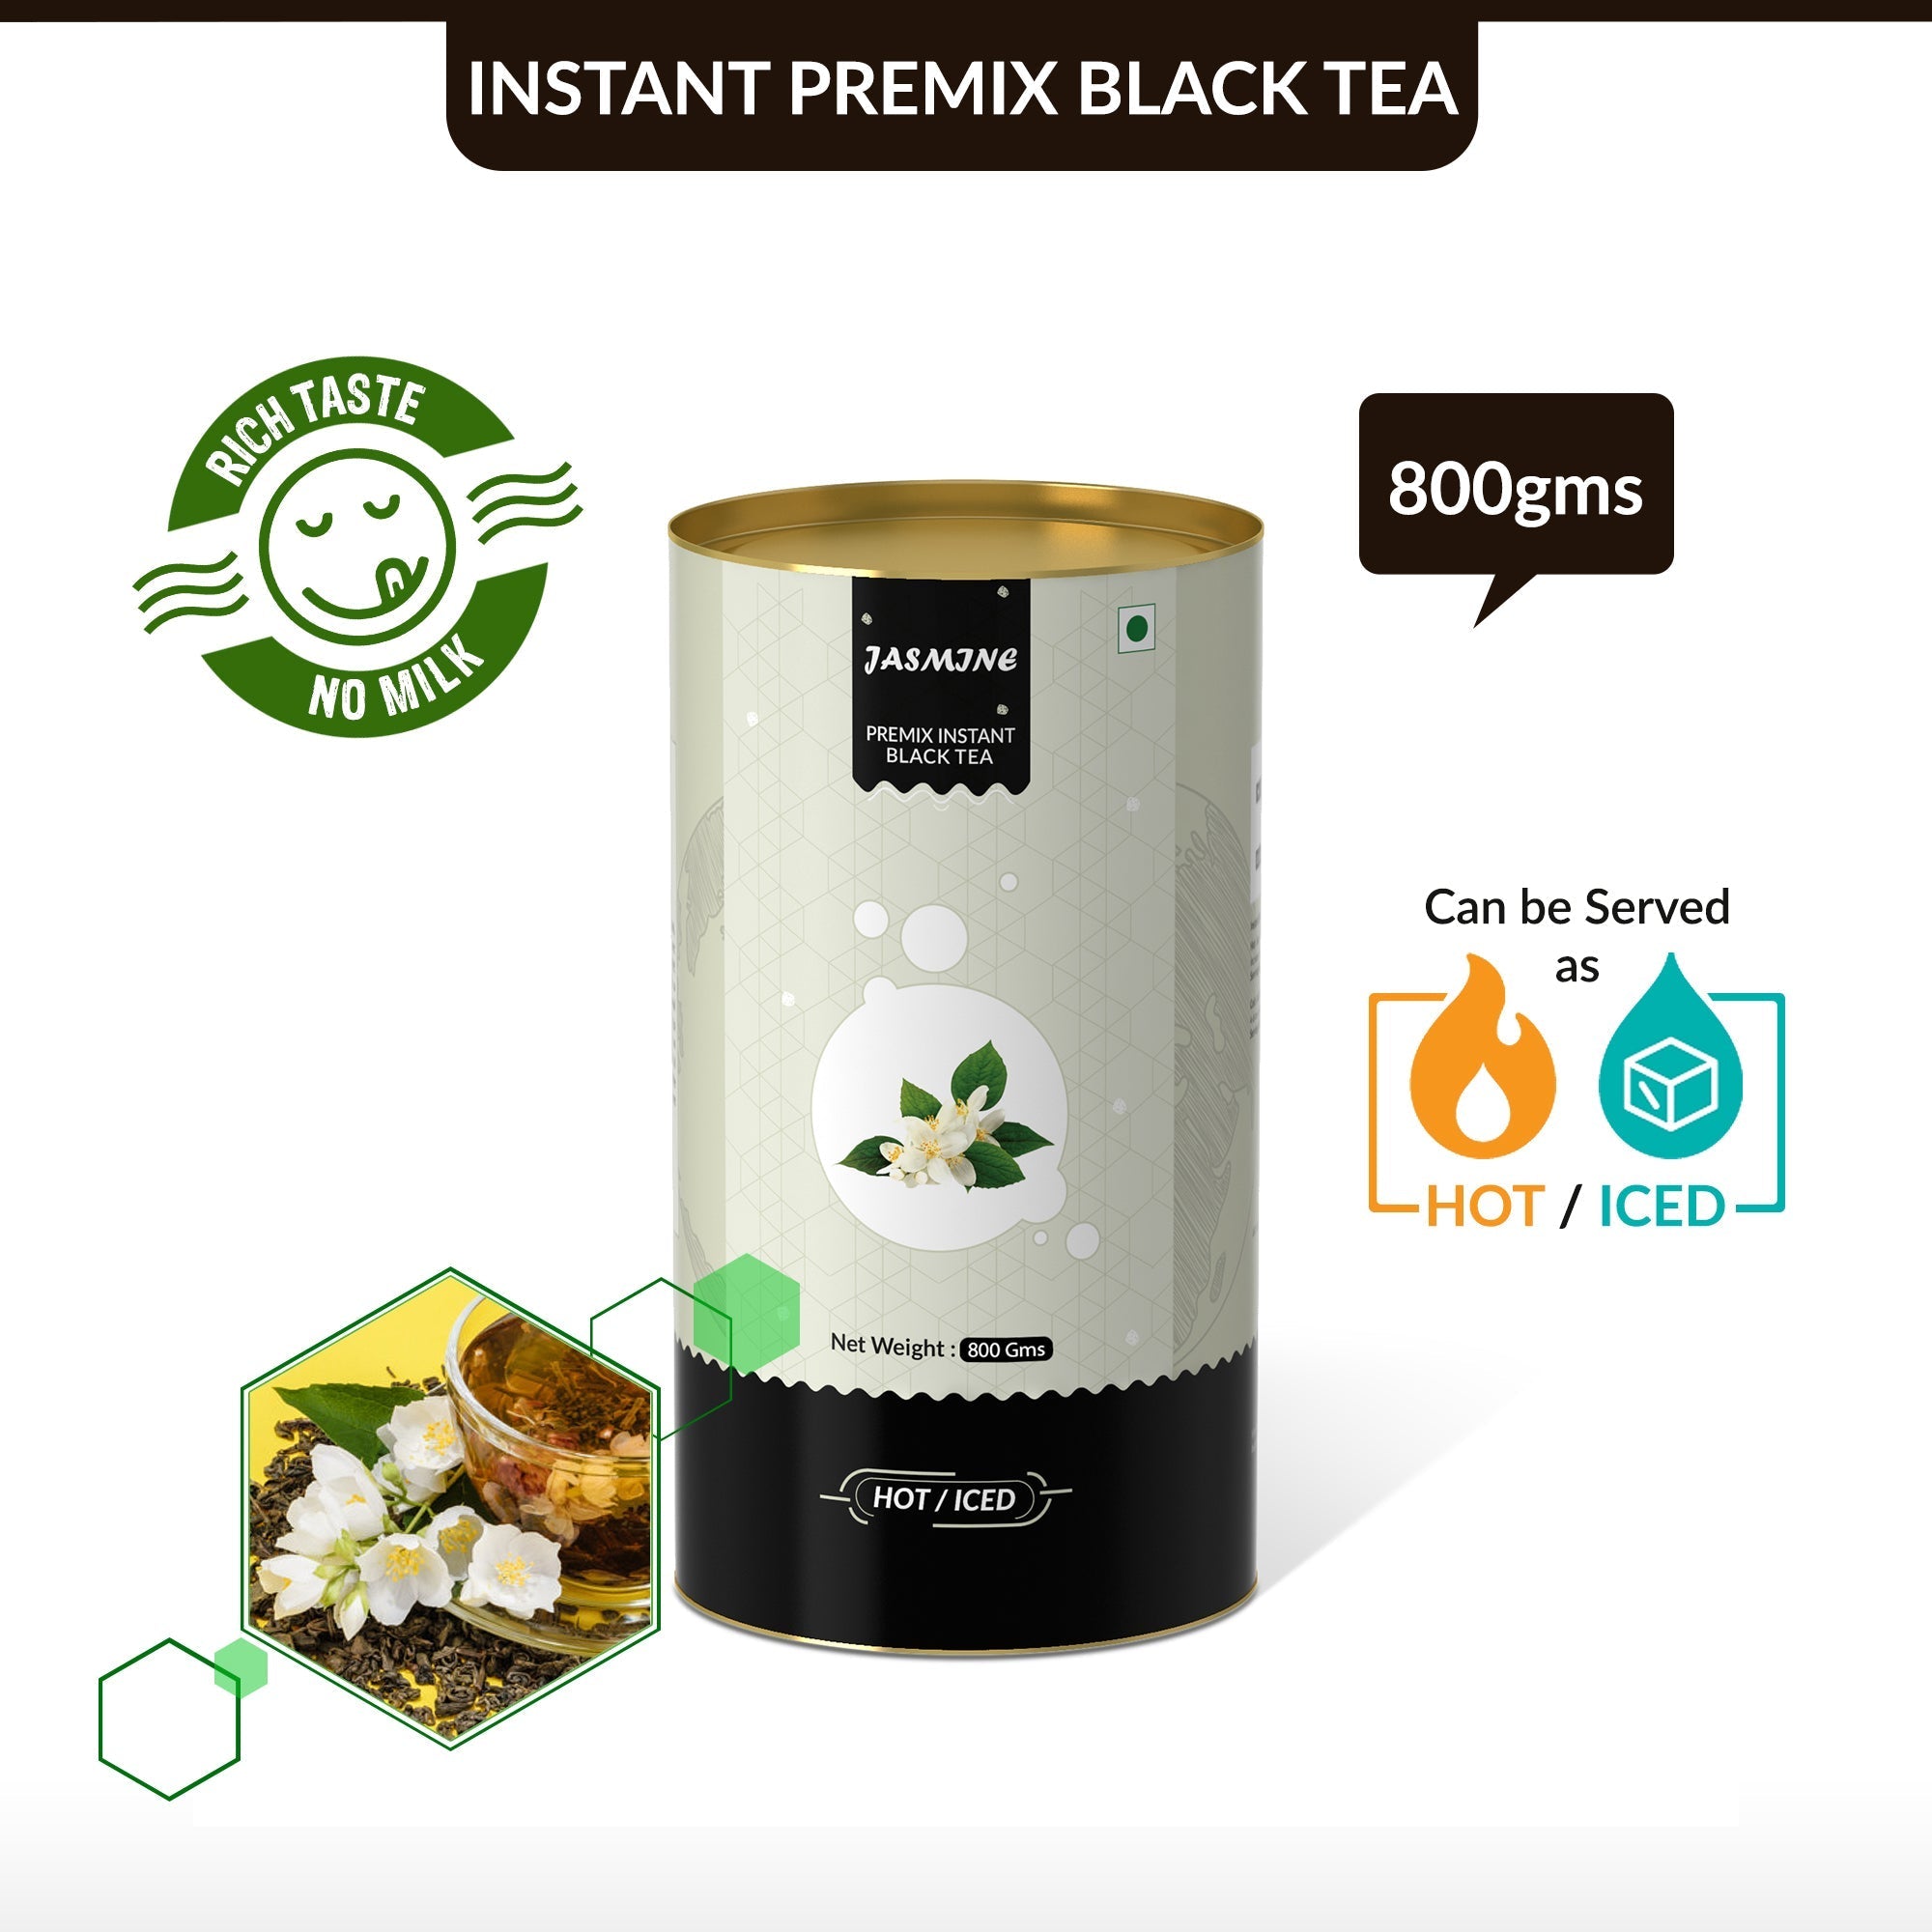 Jasmine Flavored Instant Black Tea - 800 gms